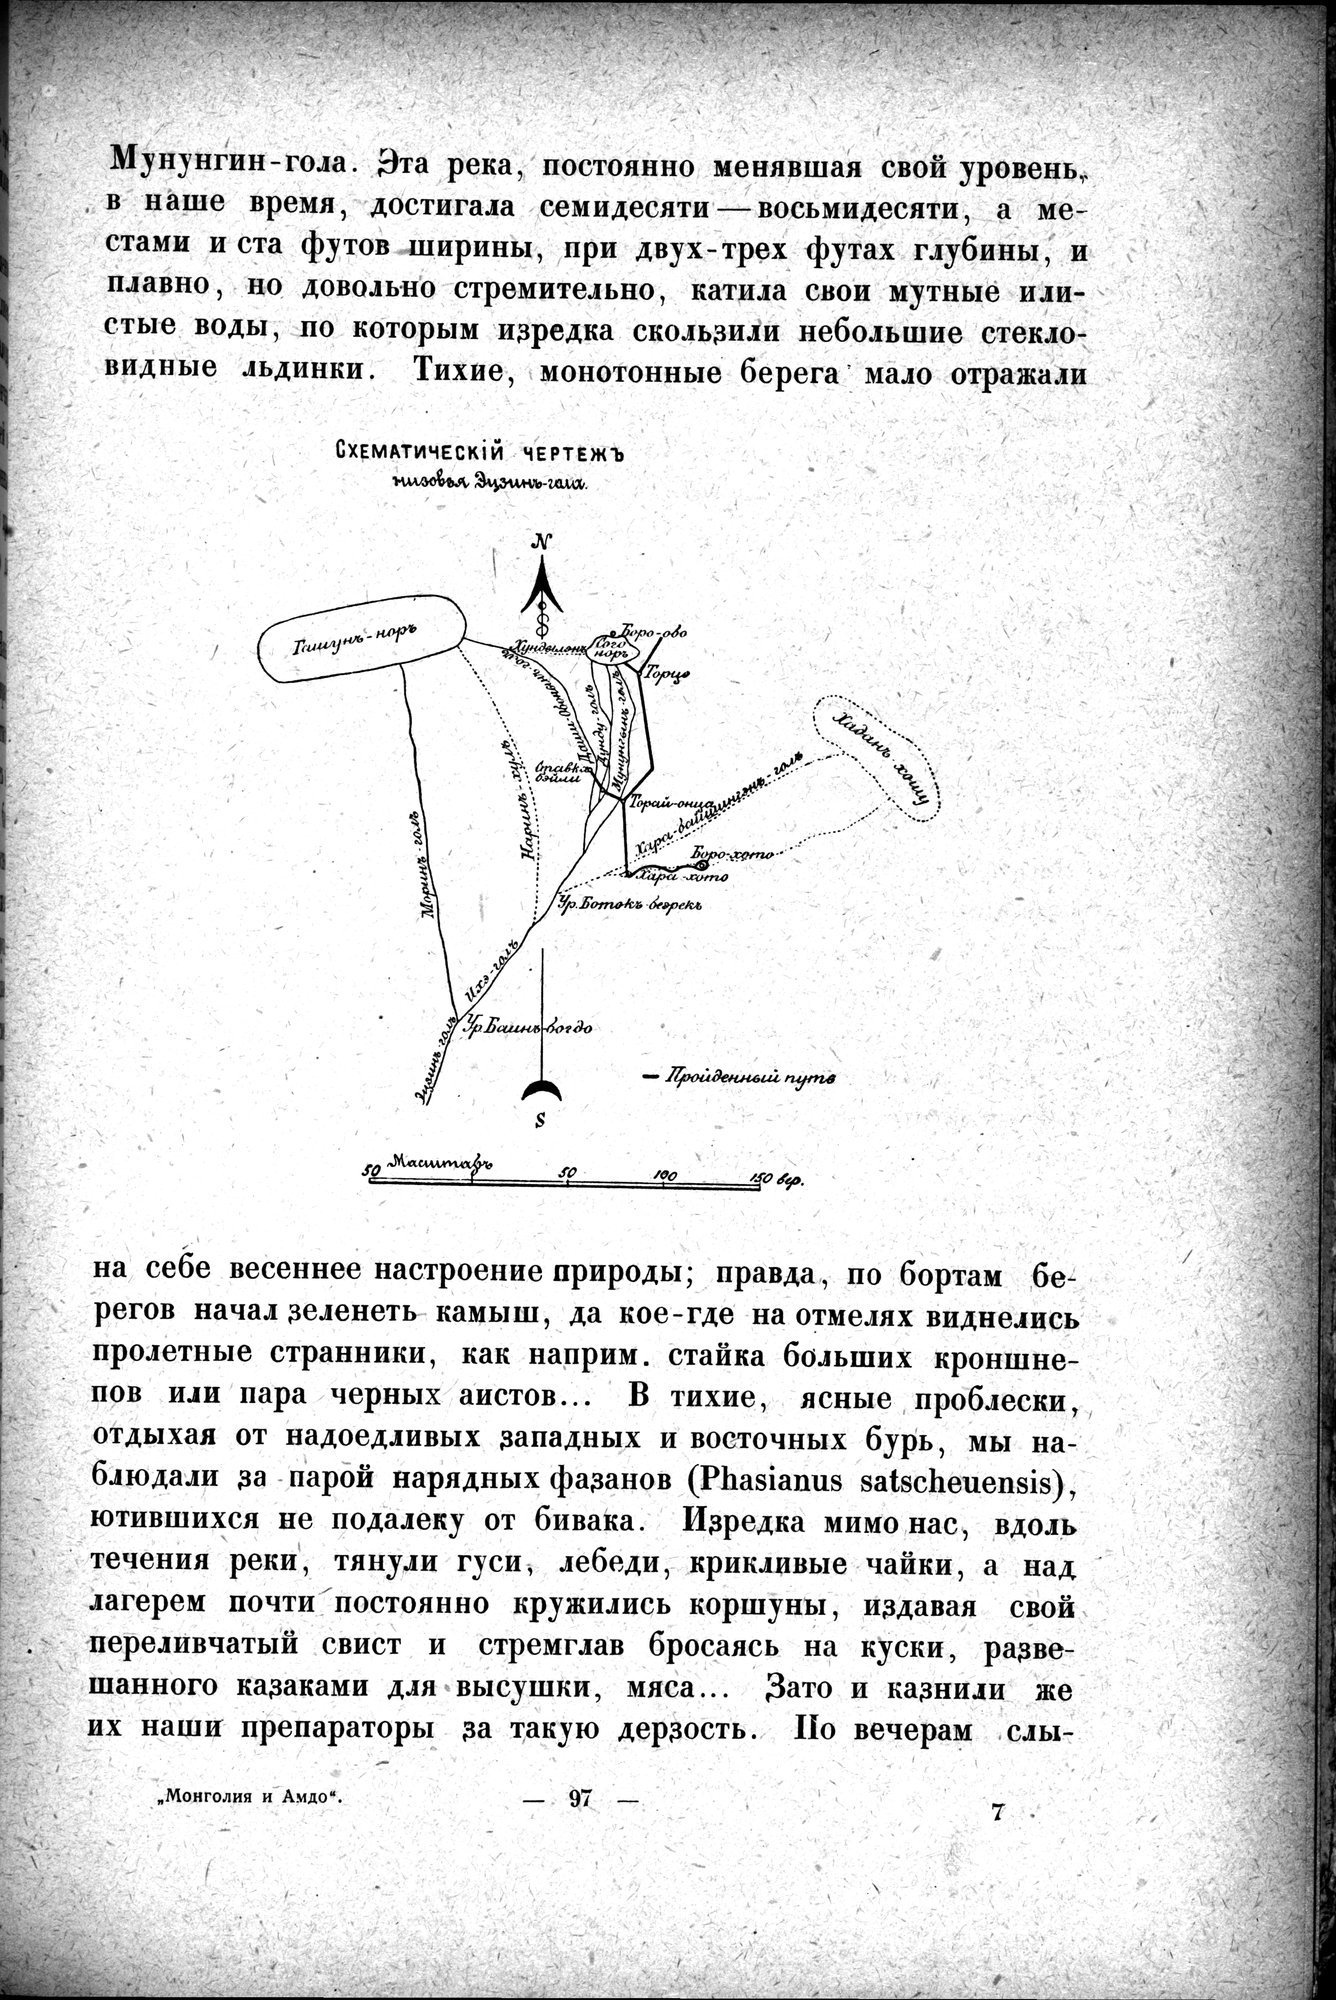 Mongoliya i Amdo i mertby gorod Khara-Khoto : vol.1 / Page 123 (Grayscale High Resolution Image)